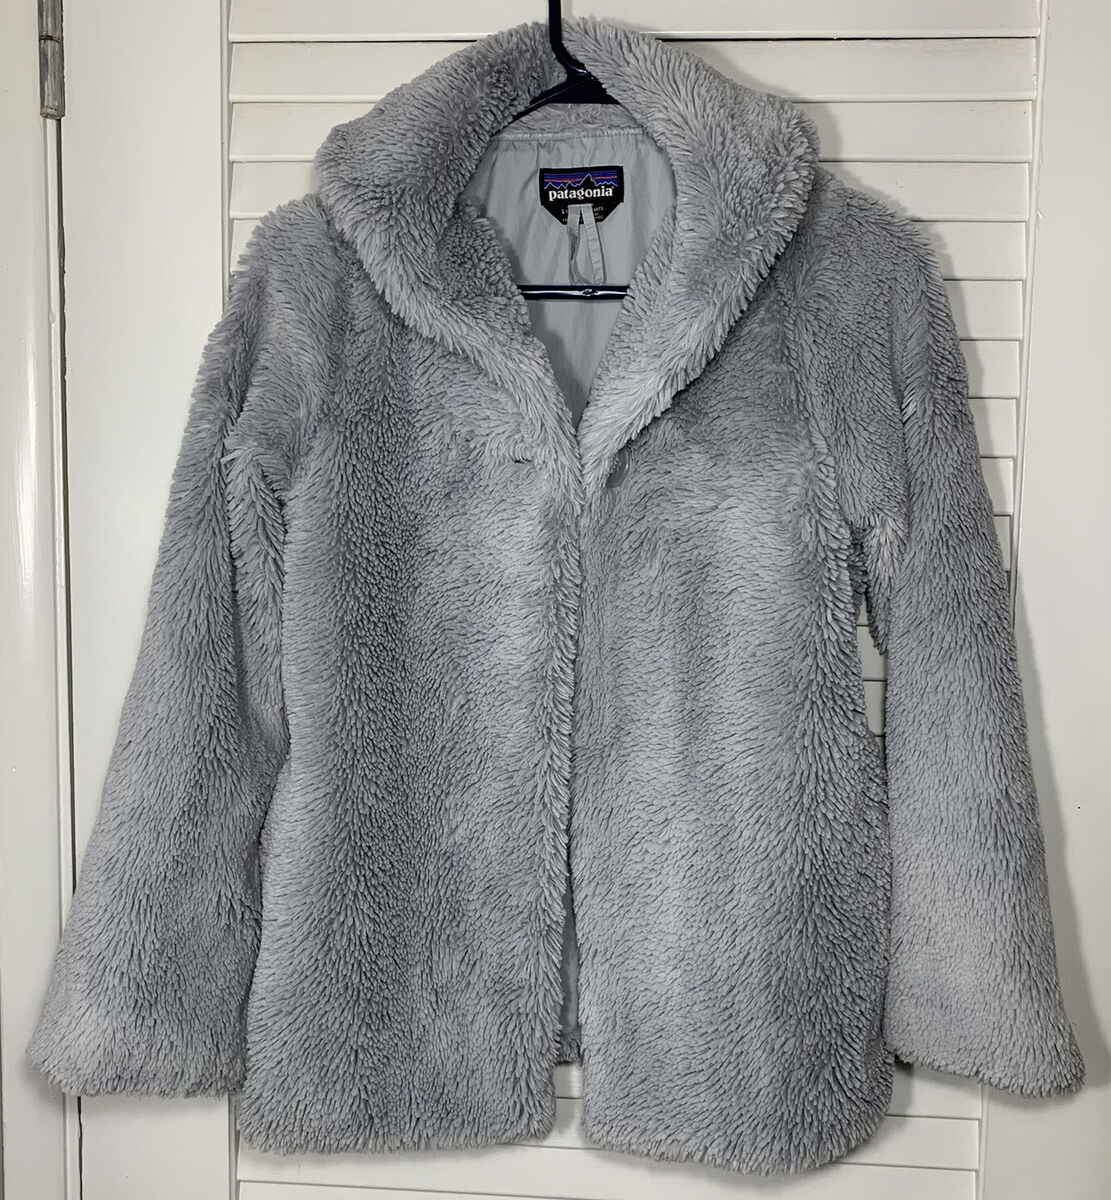 PATAGONIA Girls Large (12) Pelage Gray Fleece Faux Fur Jacket Coat  Buttons eBay